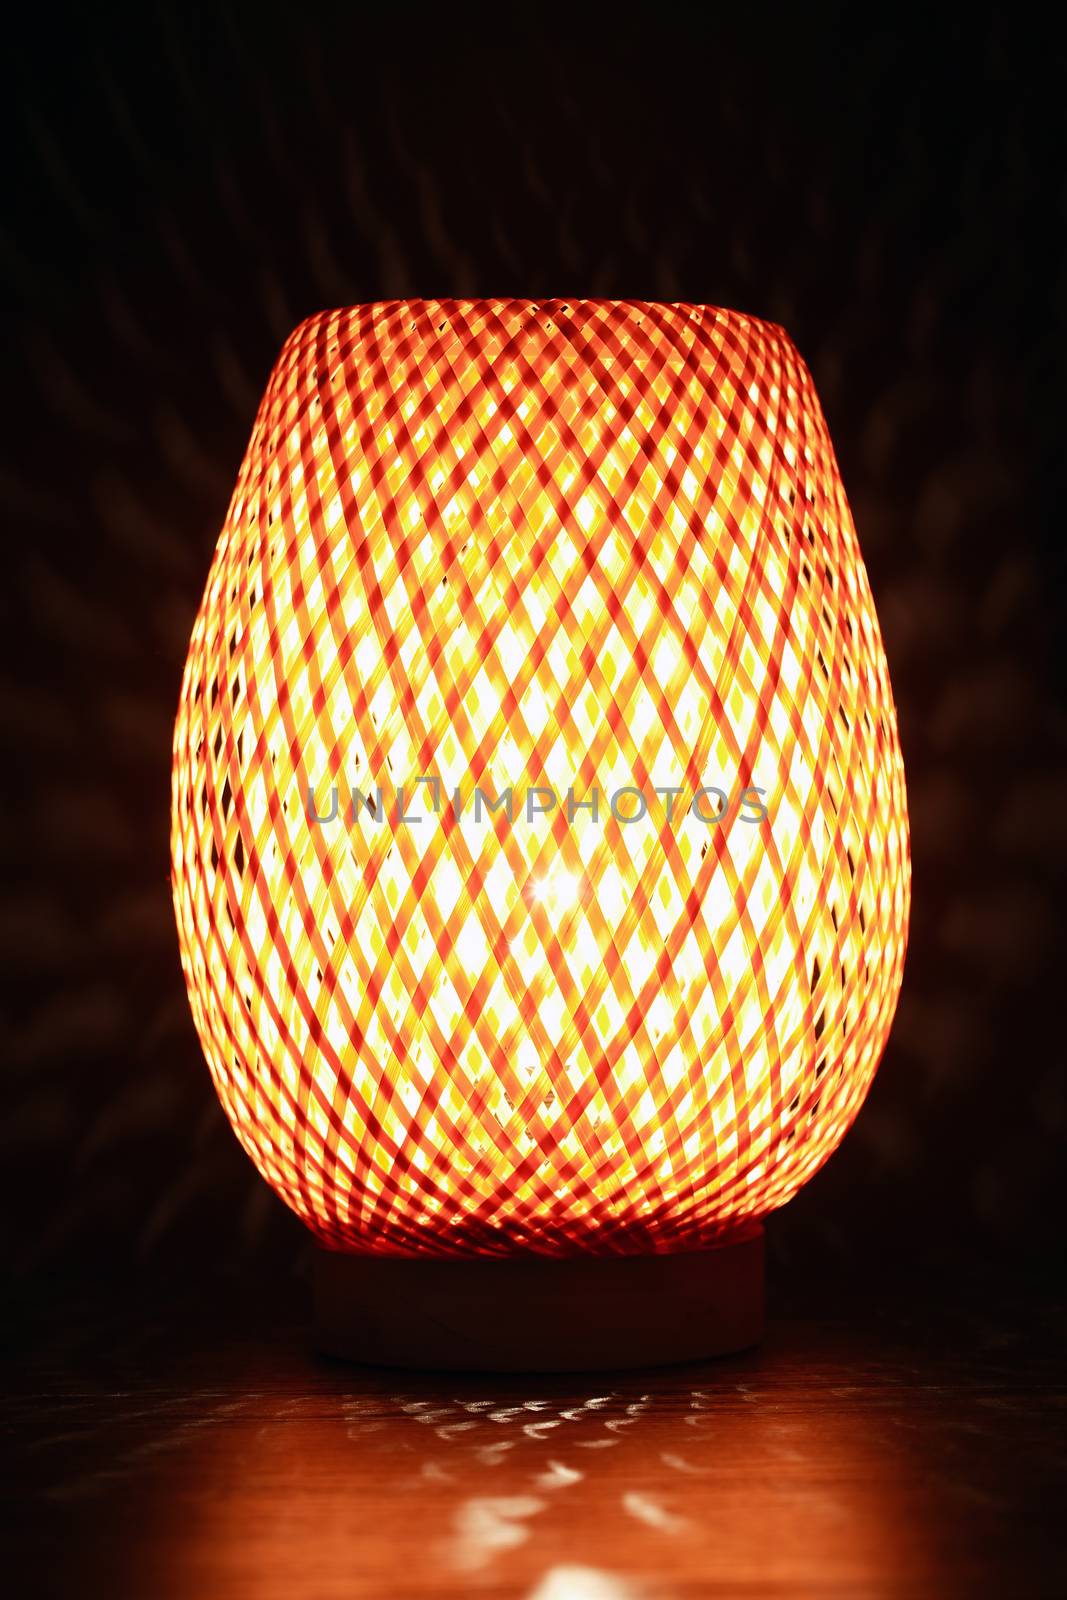 Glowing Desk Lamp by kvkirillov